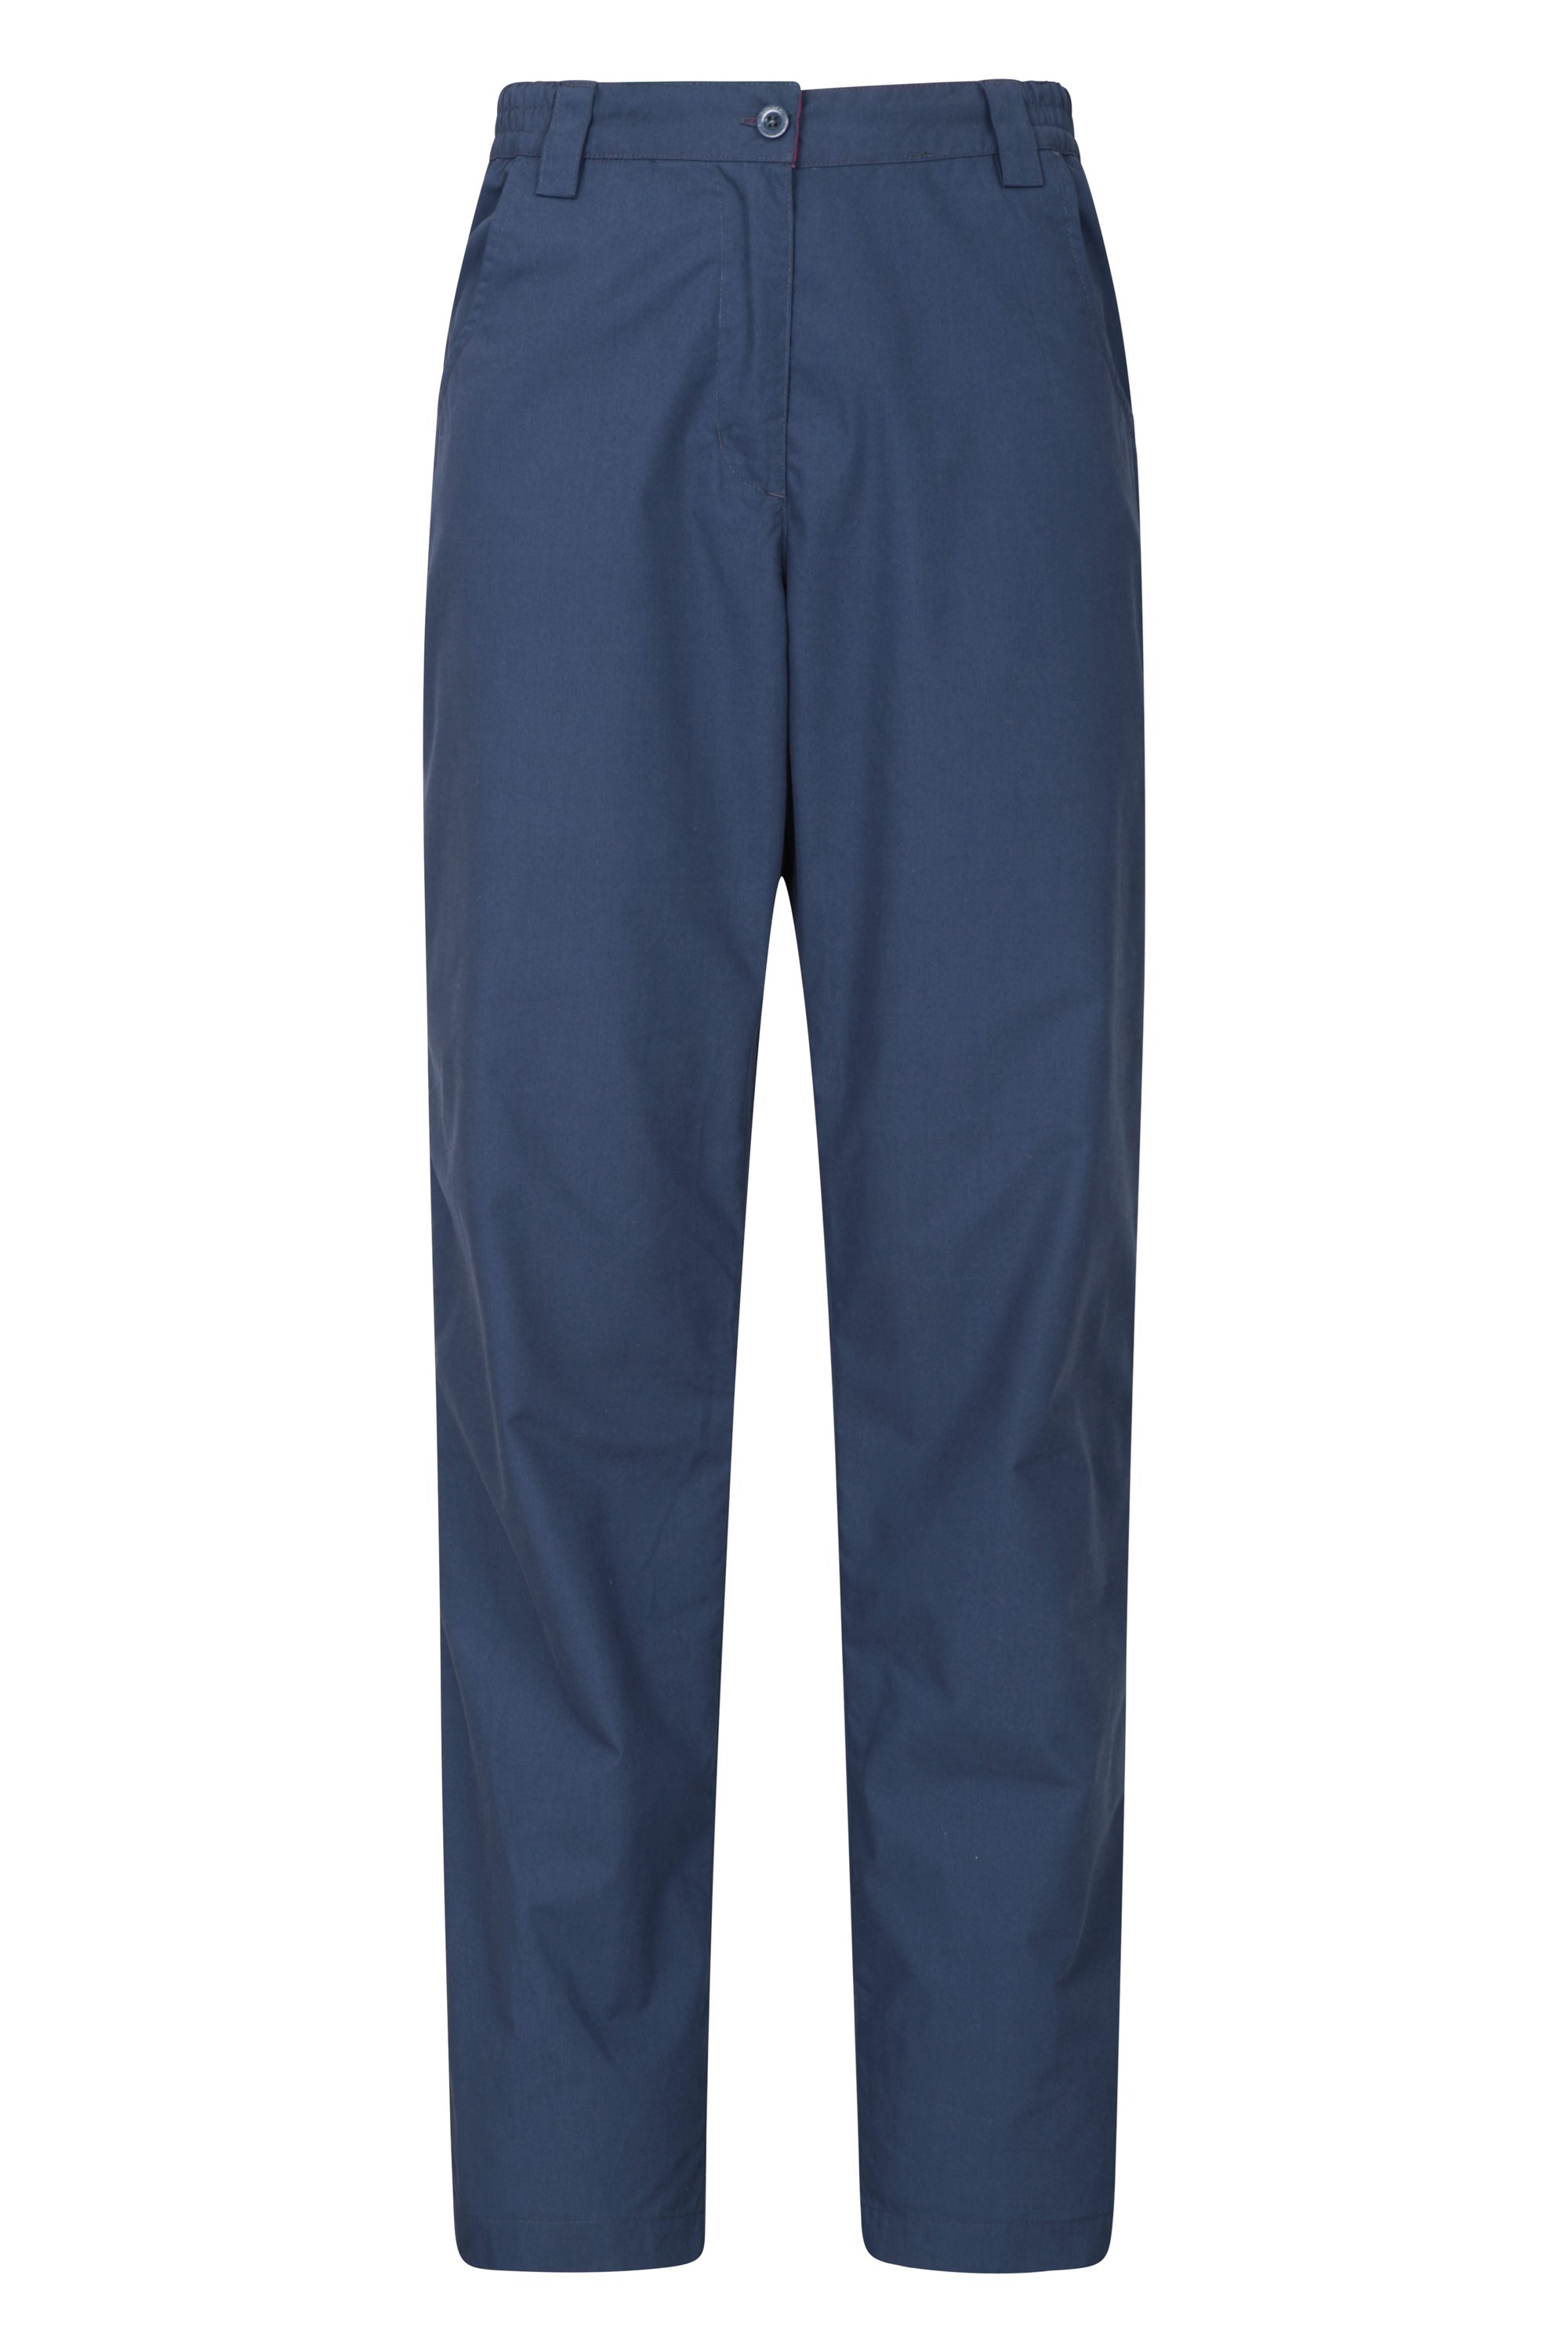 Pantalon Femmes Quest - Long - Bleu Marine